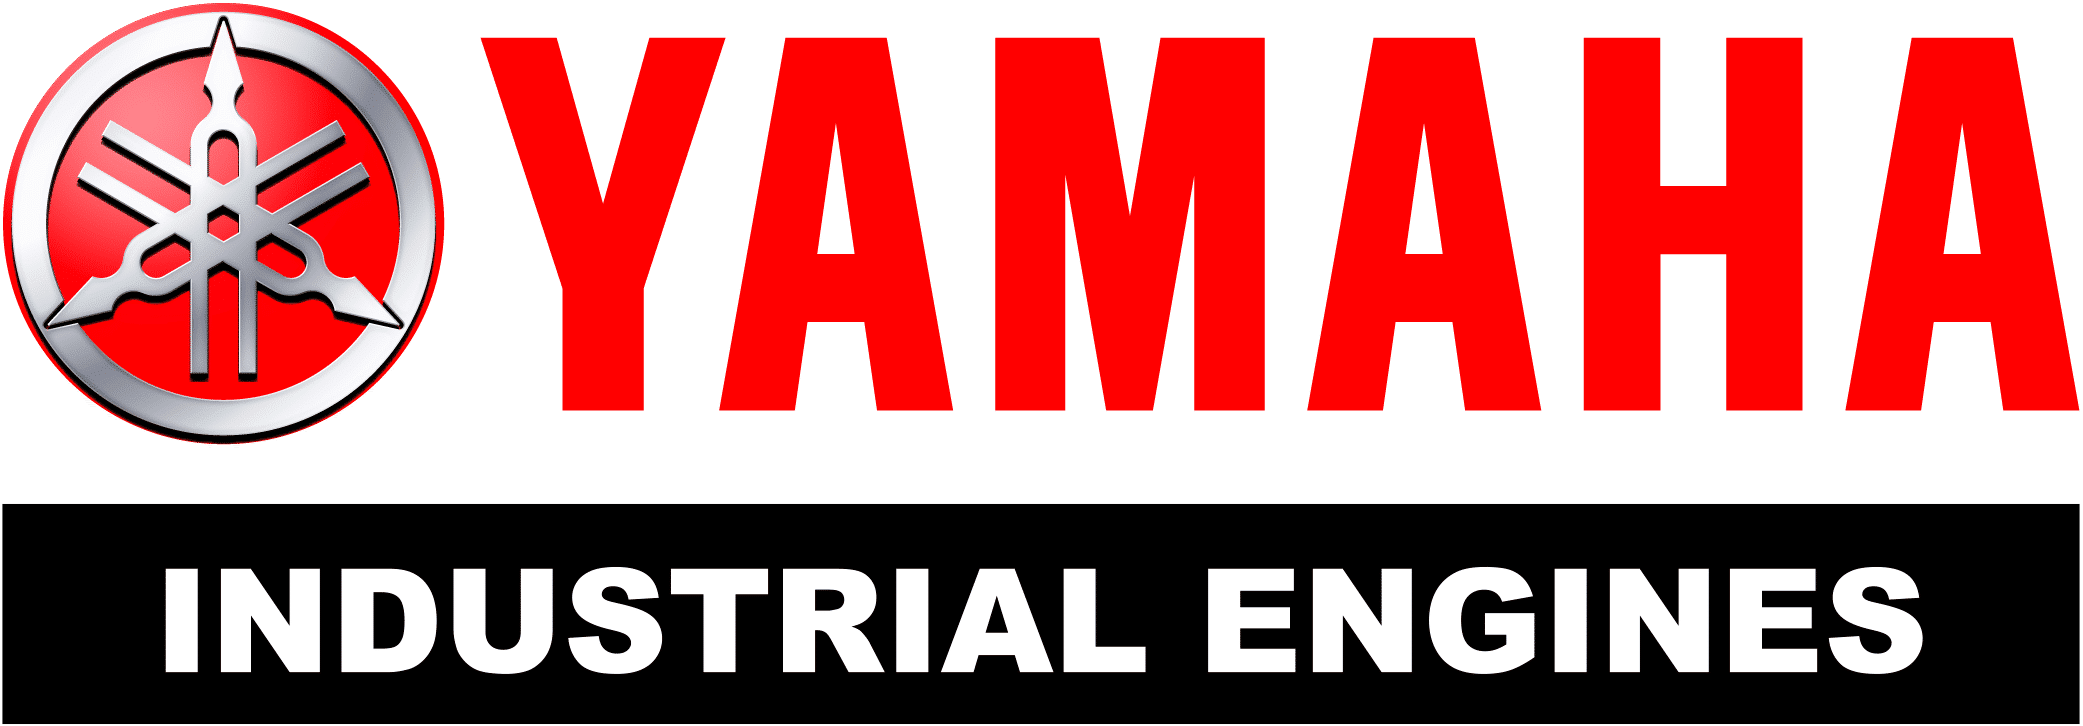 Yamaha Industrial Engines Logo